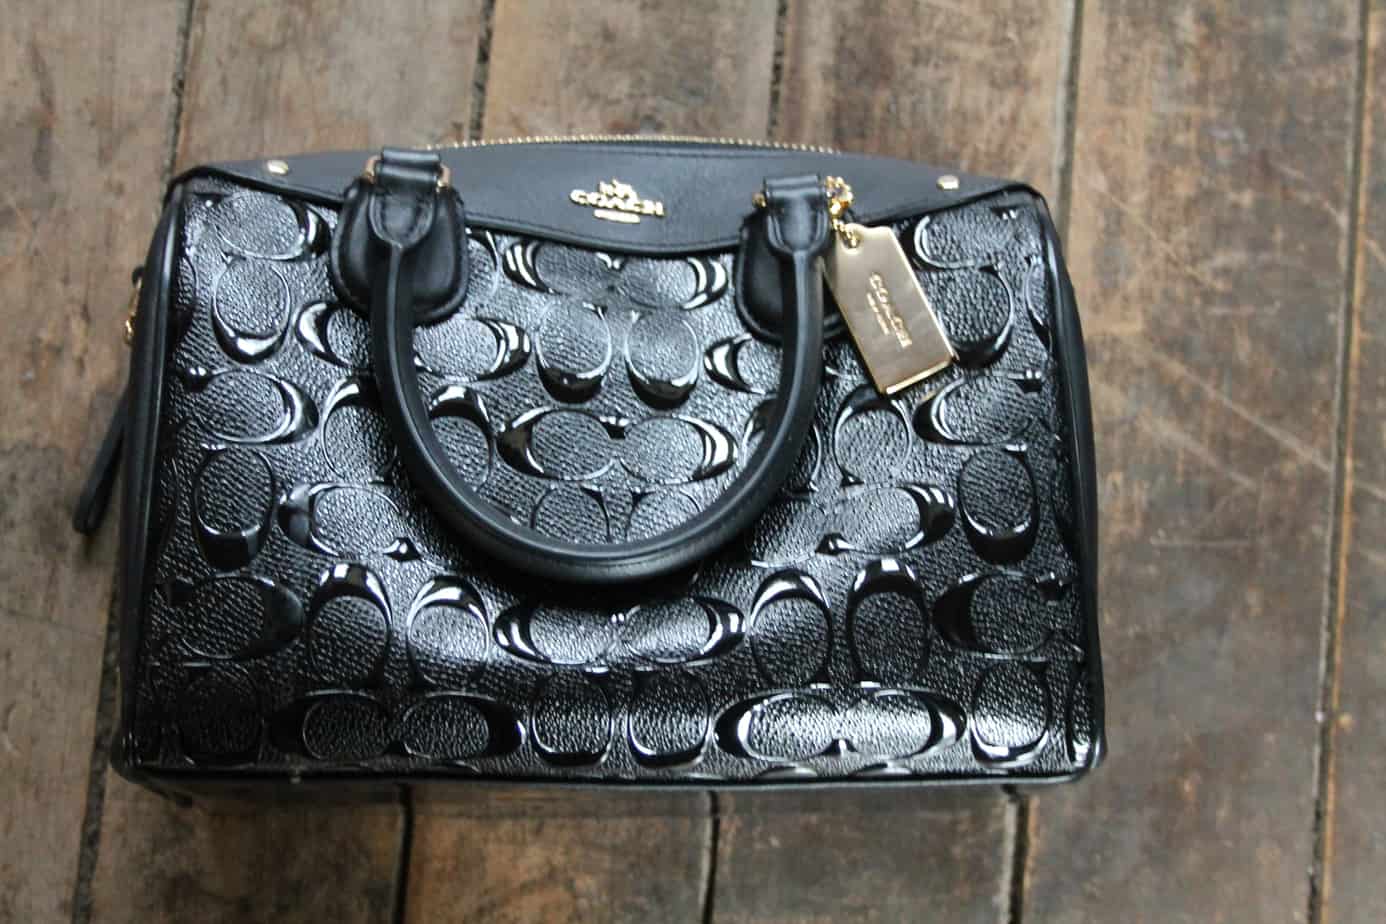 New dragon drop @ Coach Outlet : r/handbags